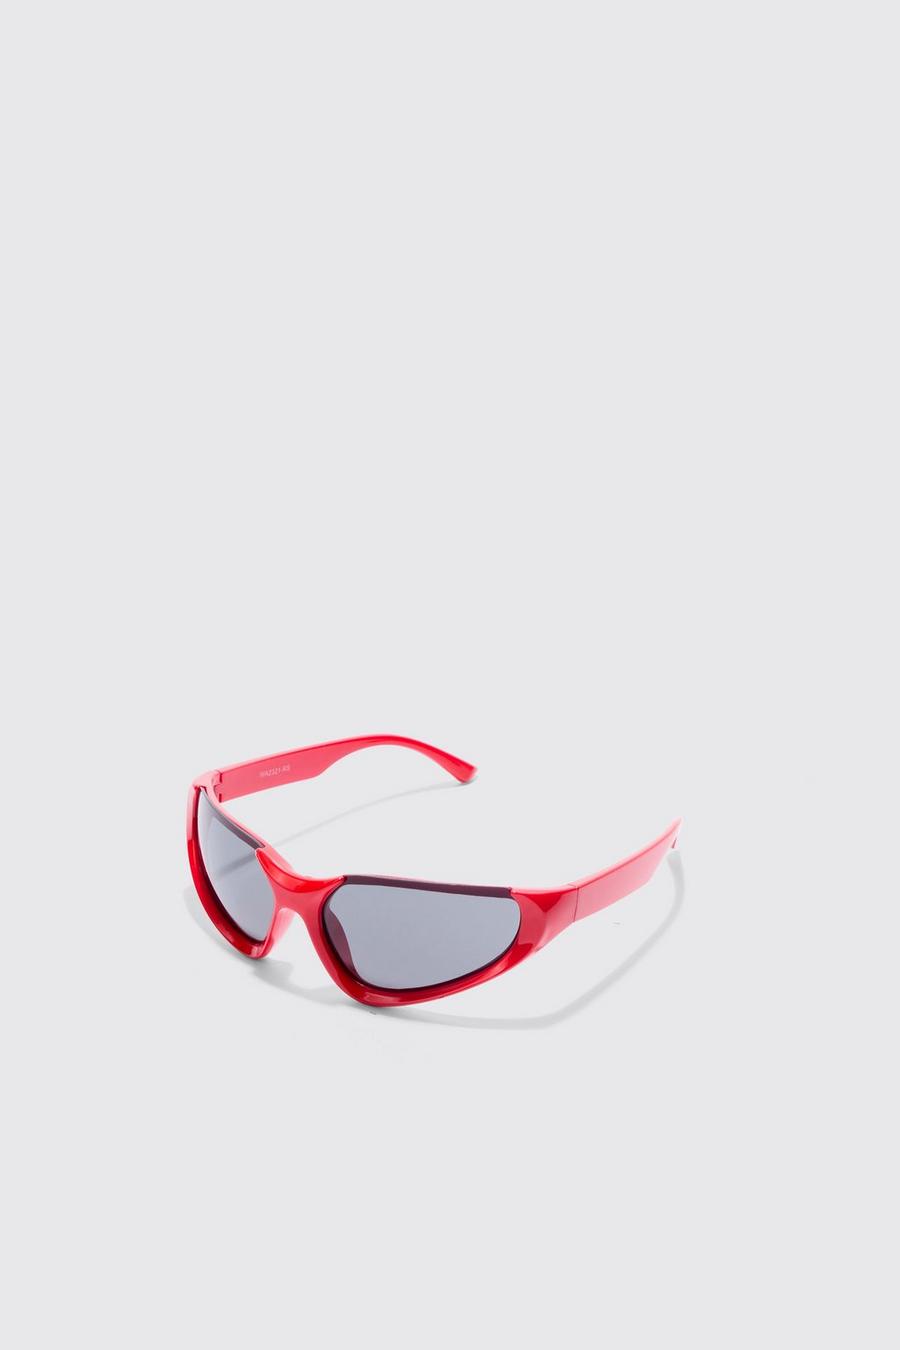 Red Salvatore Ferragamo Sunglasses